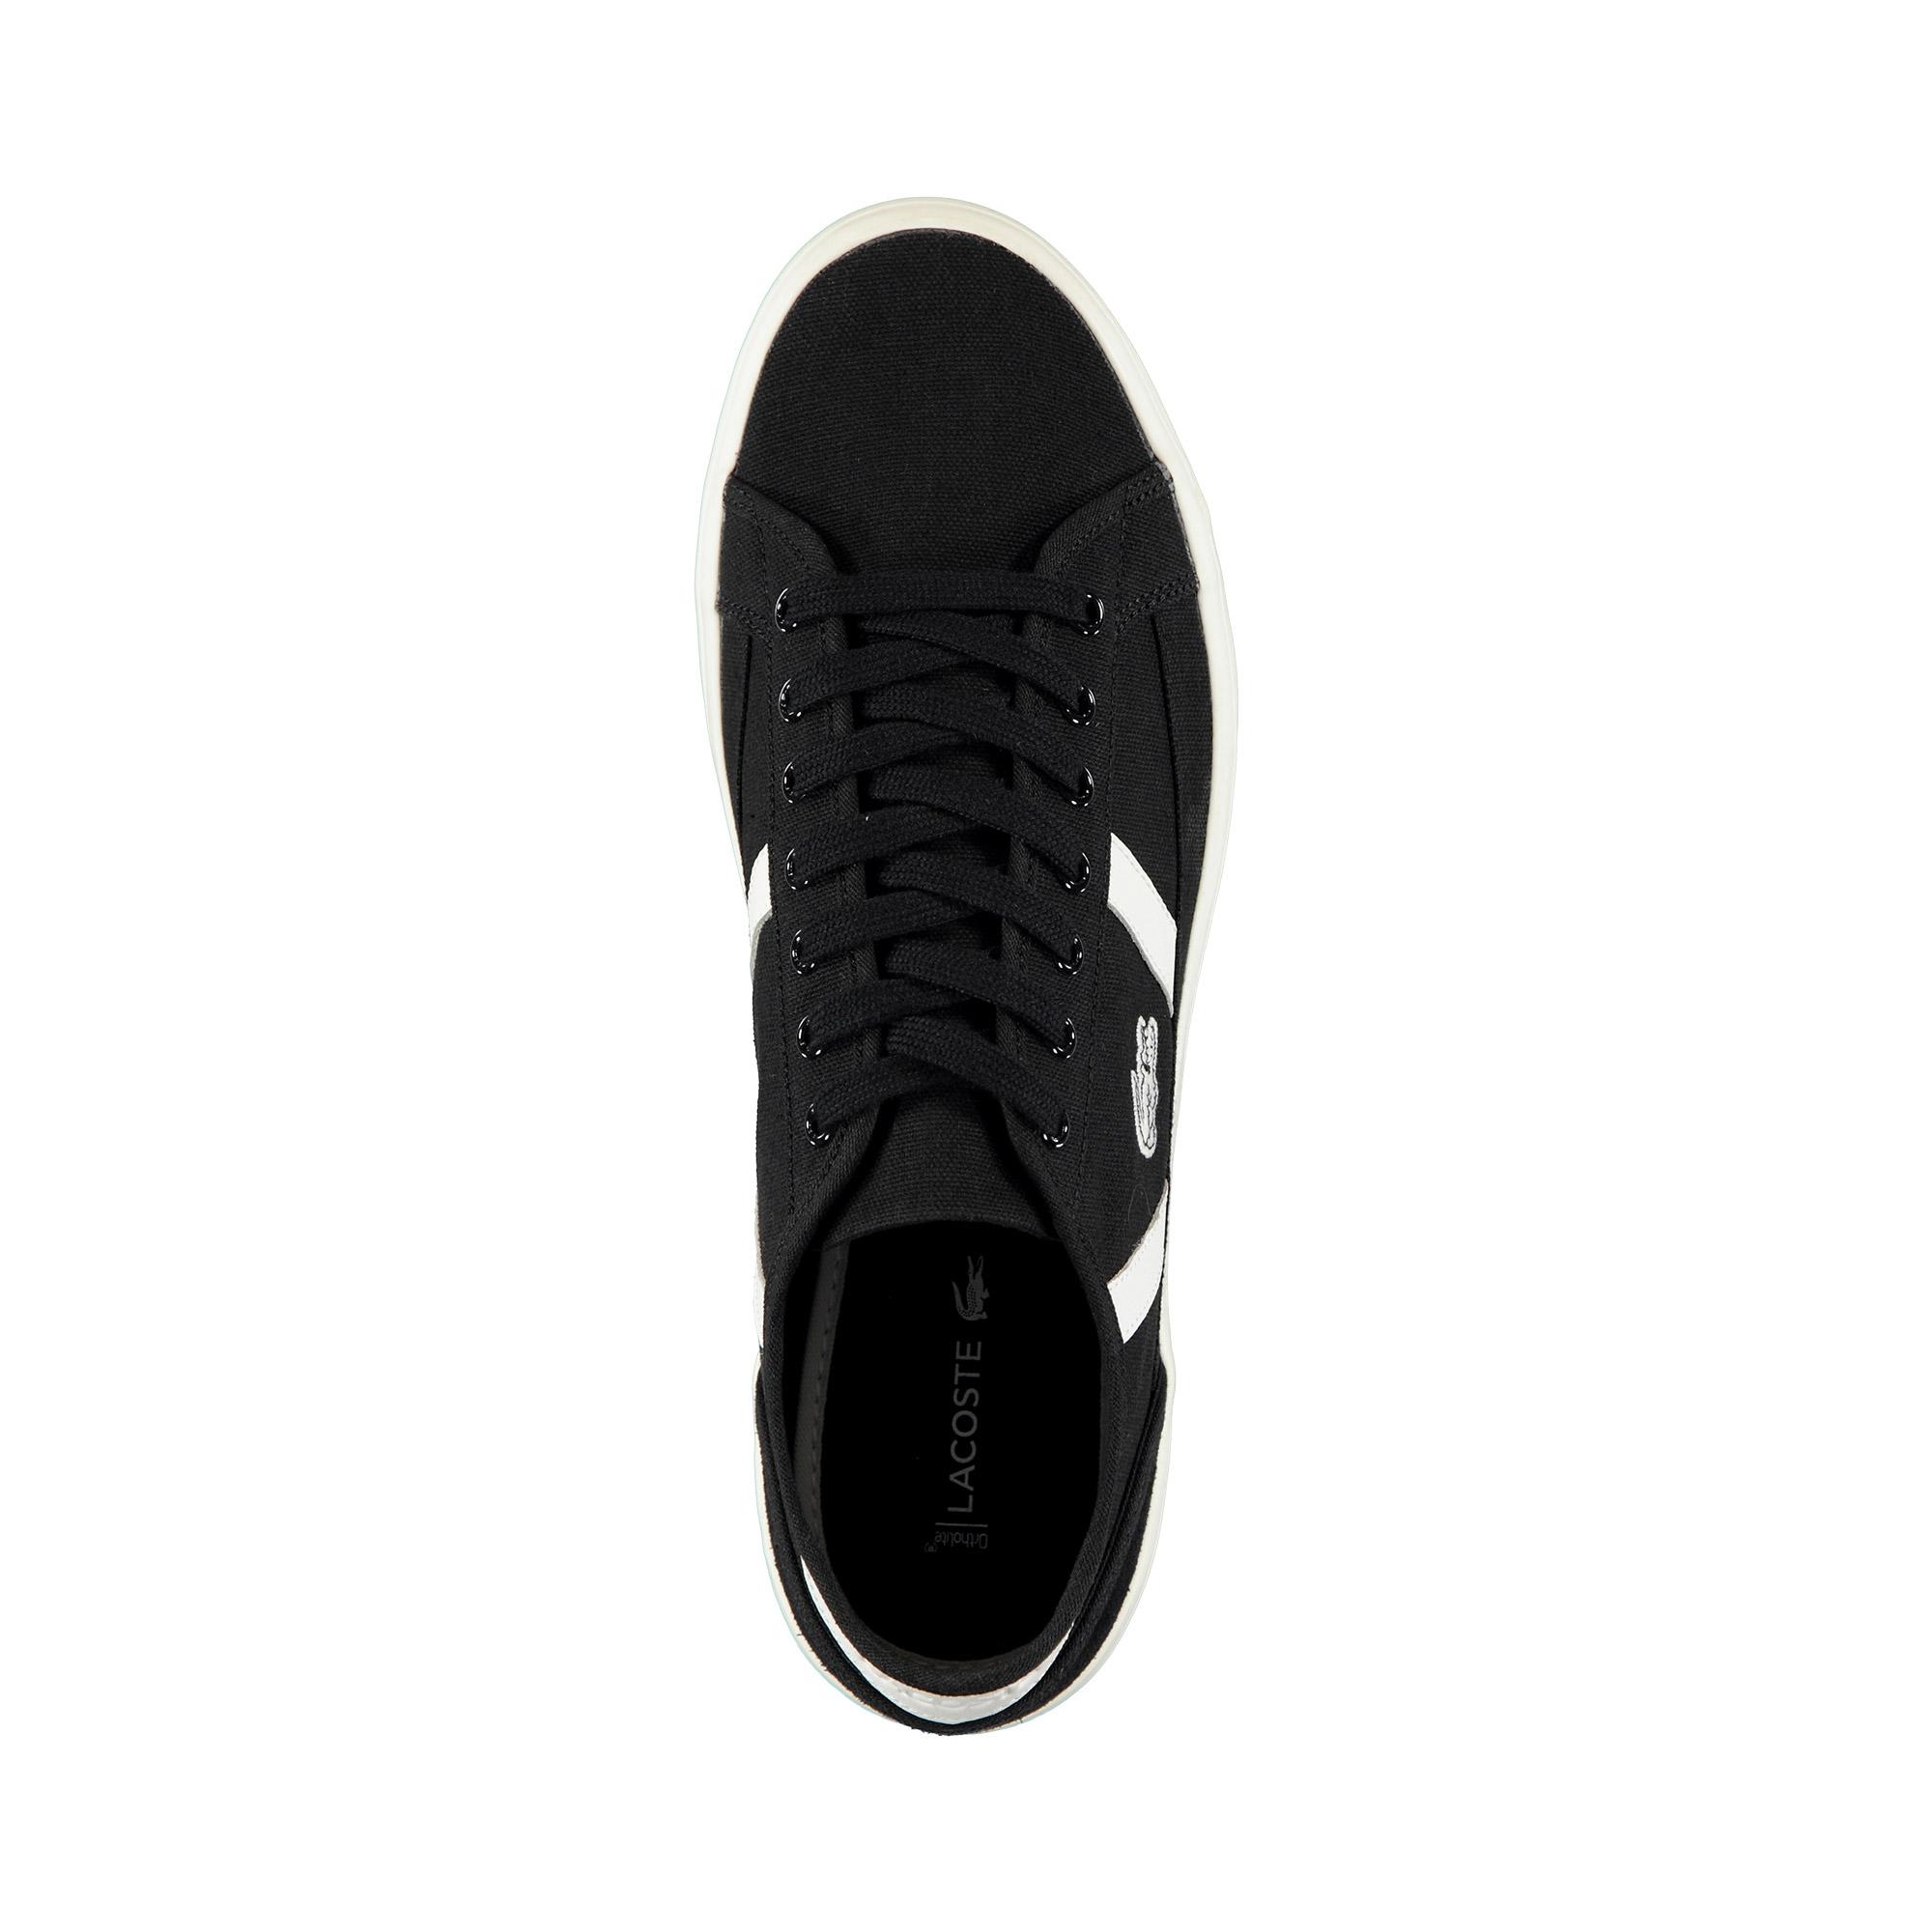 Lacoste Sideline 119 1 Men's shoes